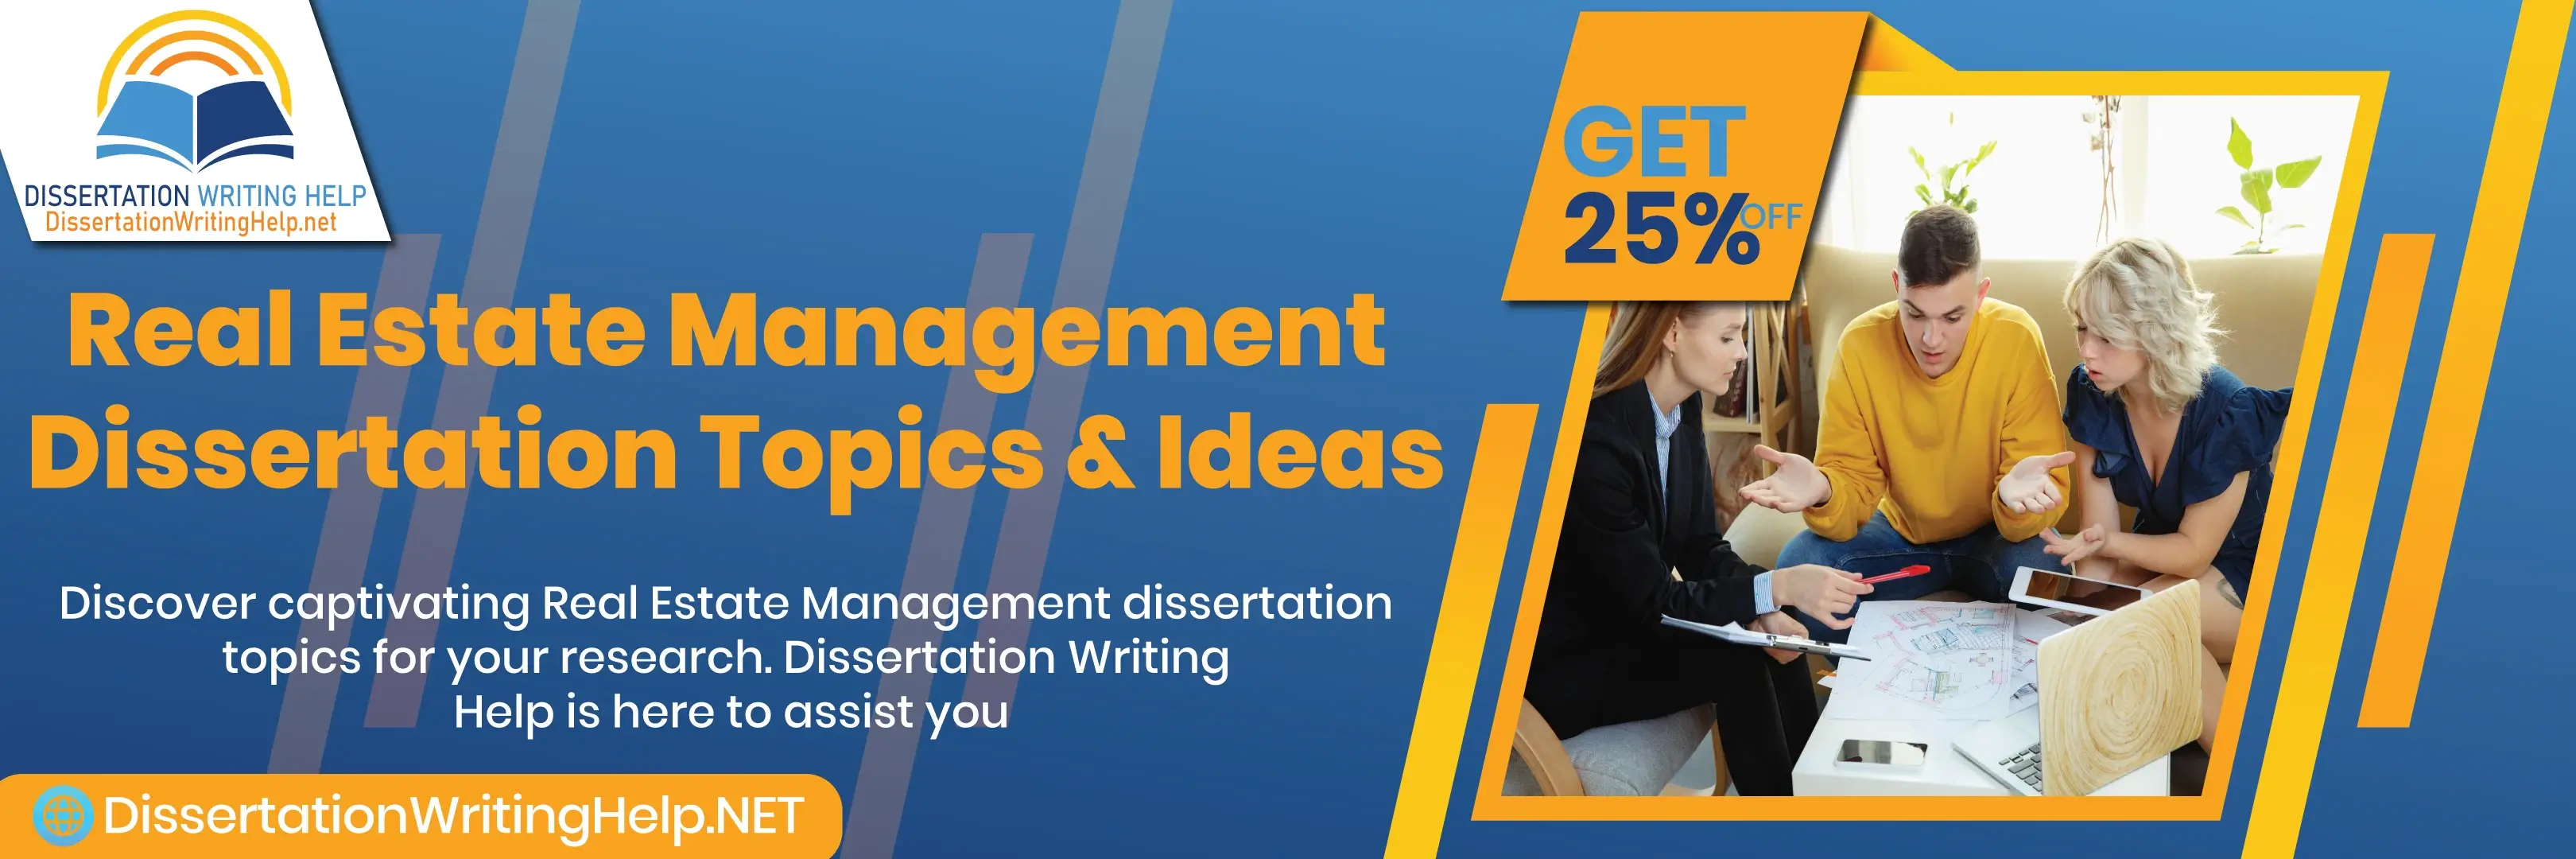 Real-Estate-Management-Dissertation-Topics-&-Ideas